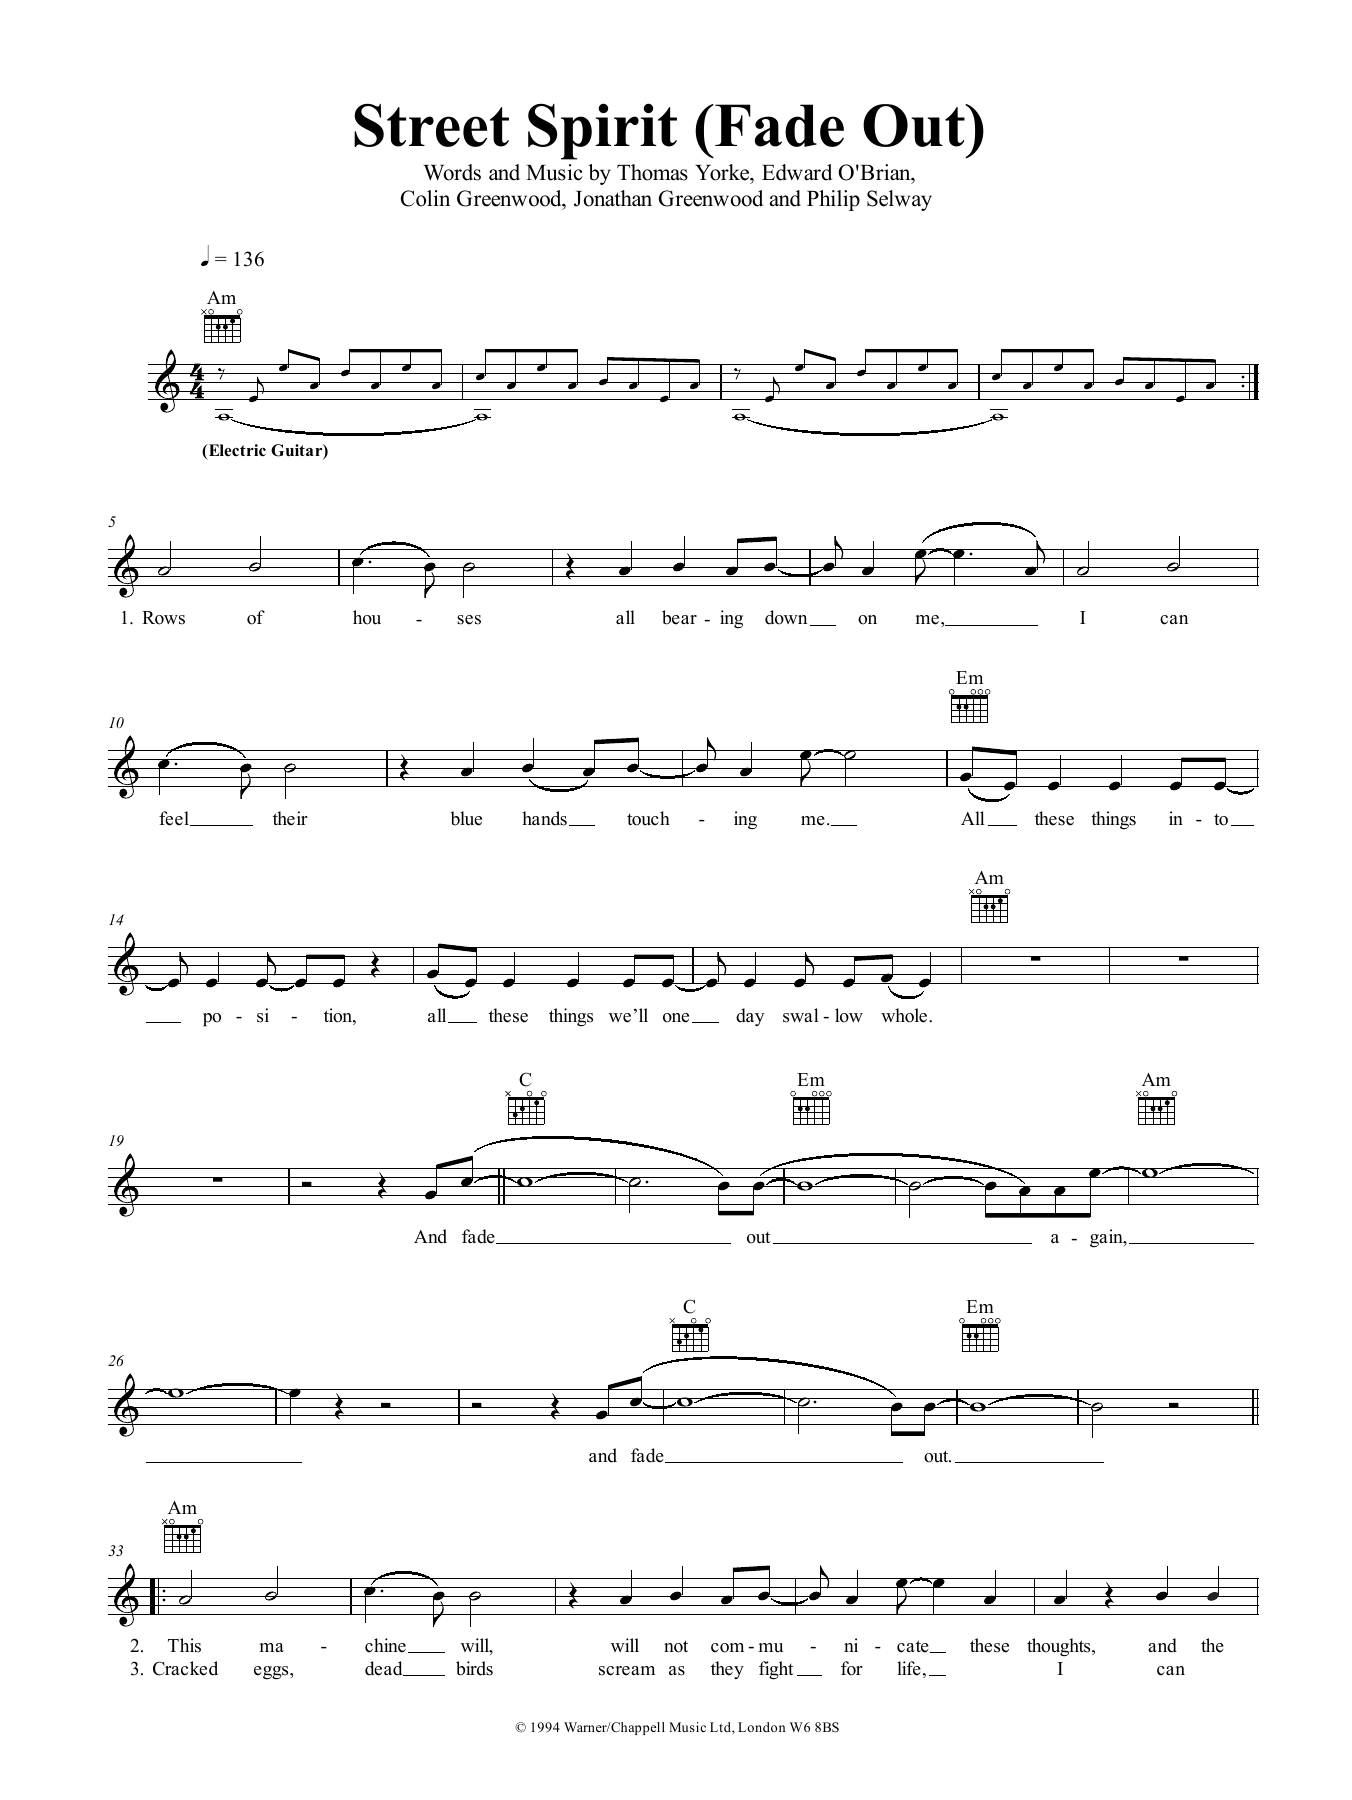 Radiohead Street Spirit (Fade Out) Sheet Music Notes & Chords for Guitar Tab - Download or Print PDF